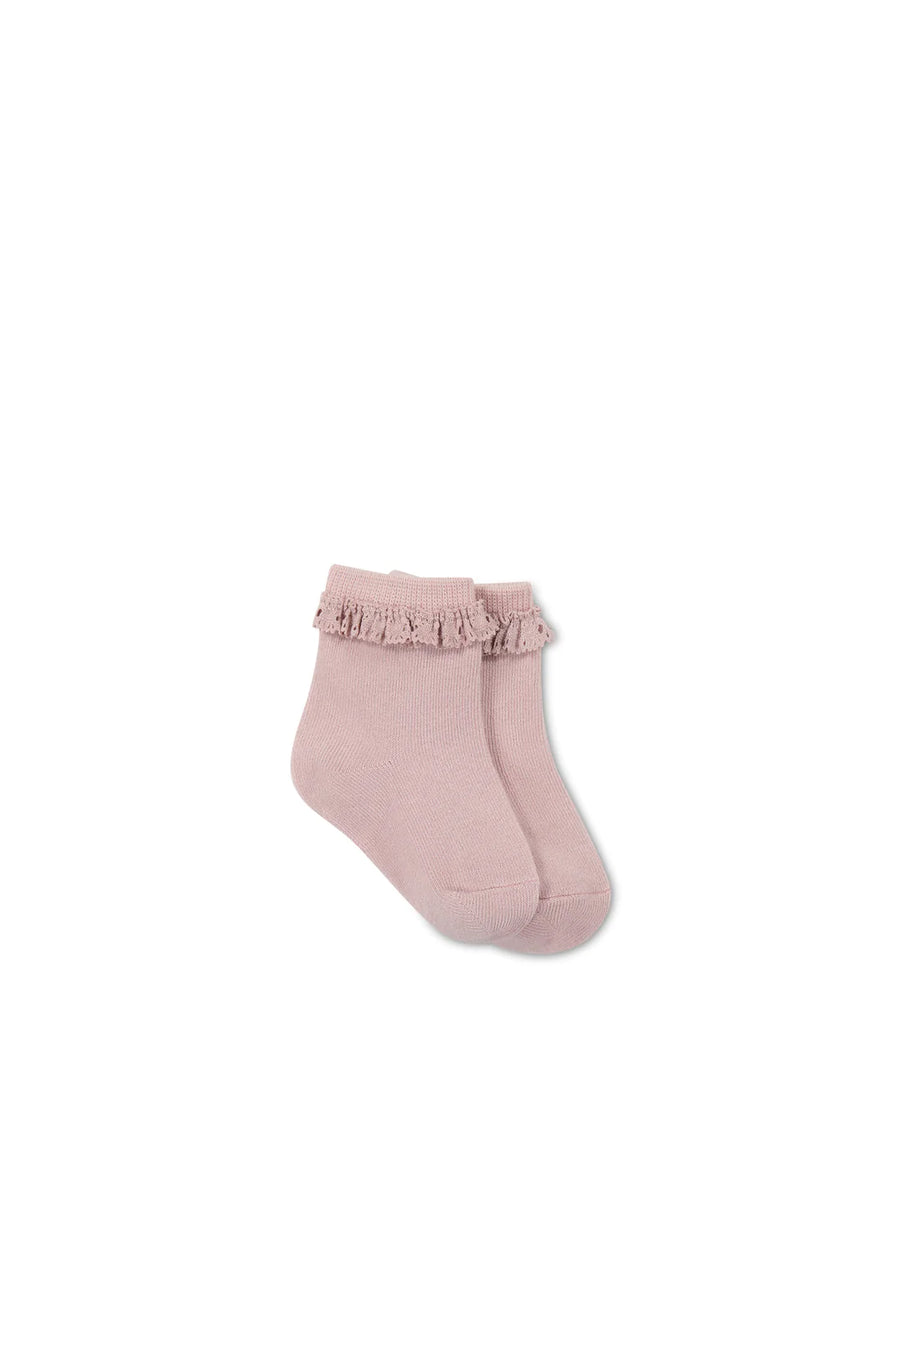 Jacquard Floral Sock - Bunny Buddies Powder Pink